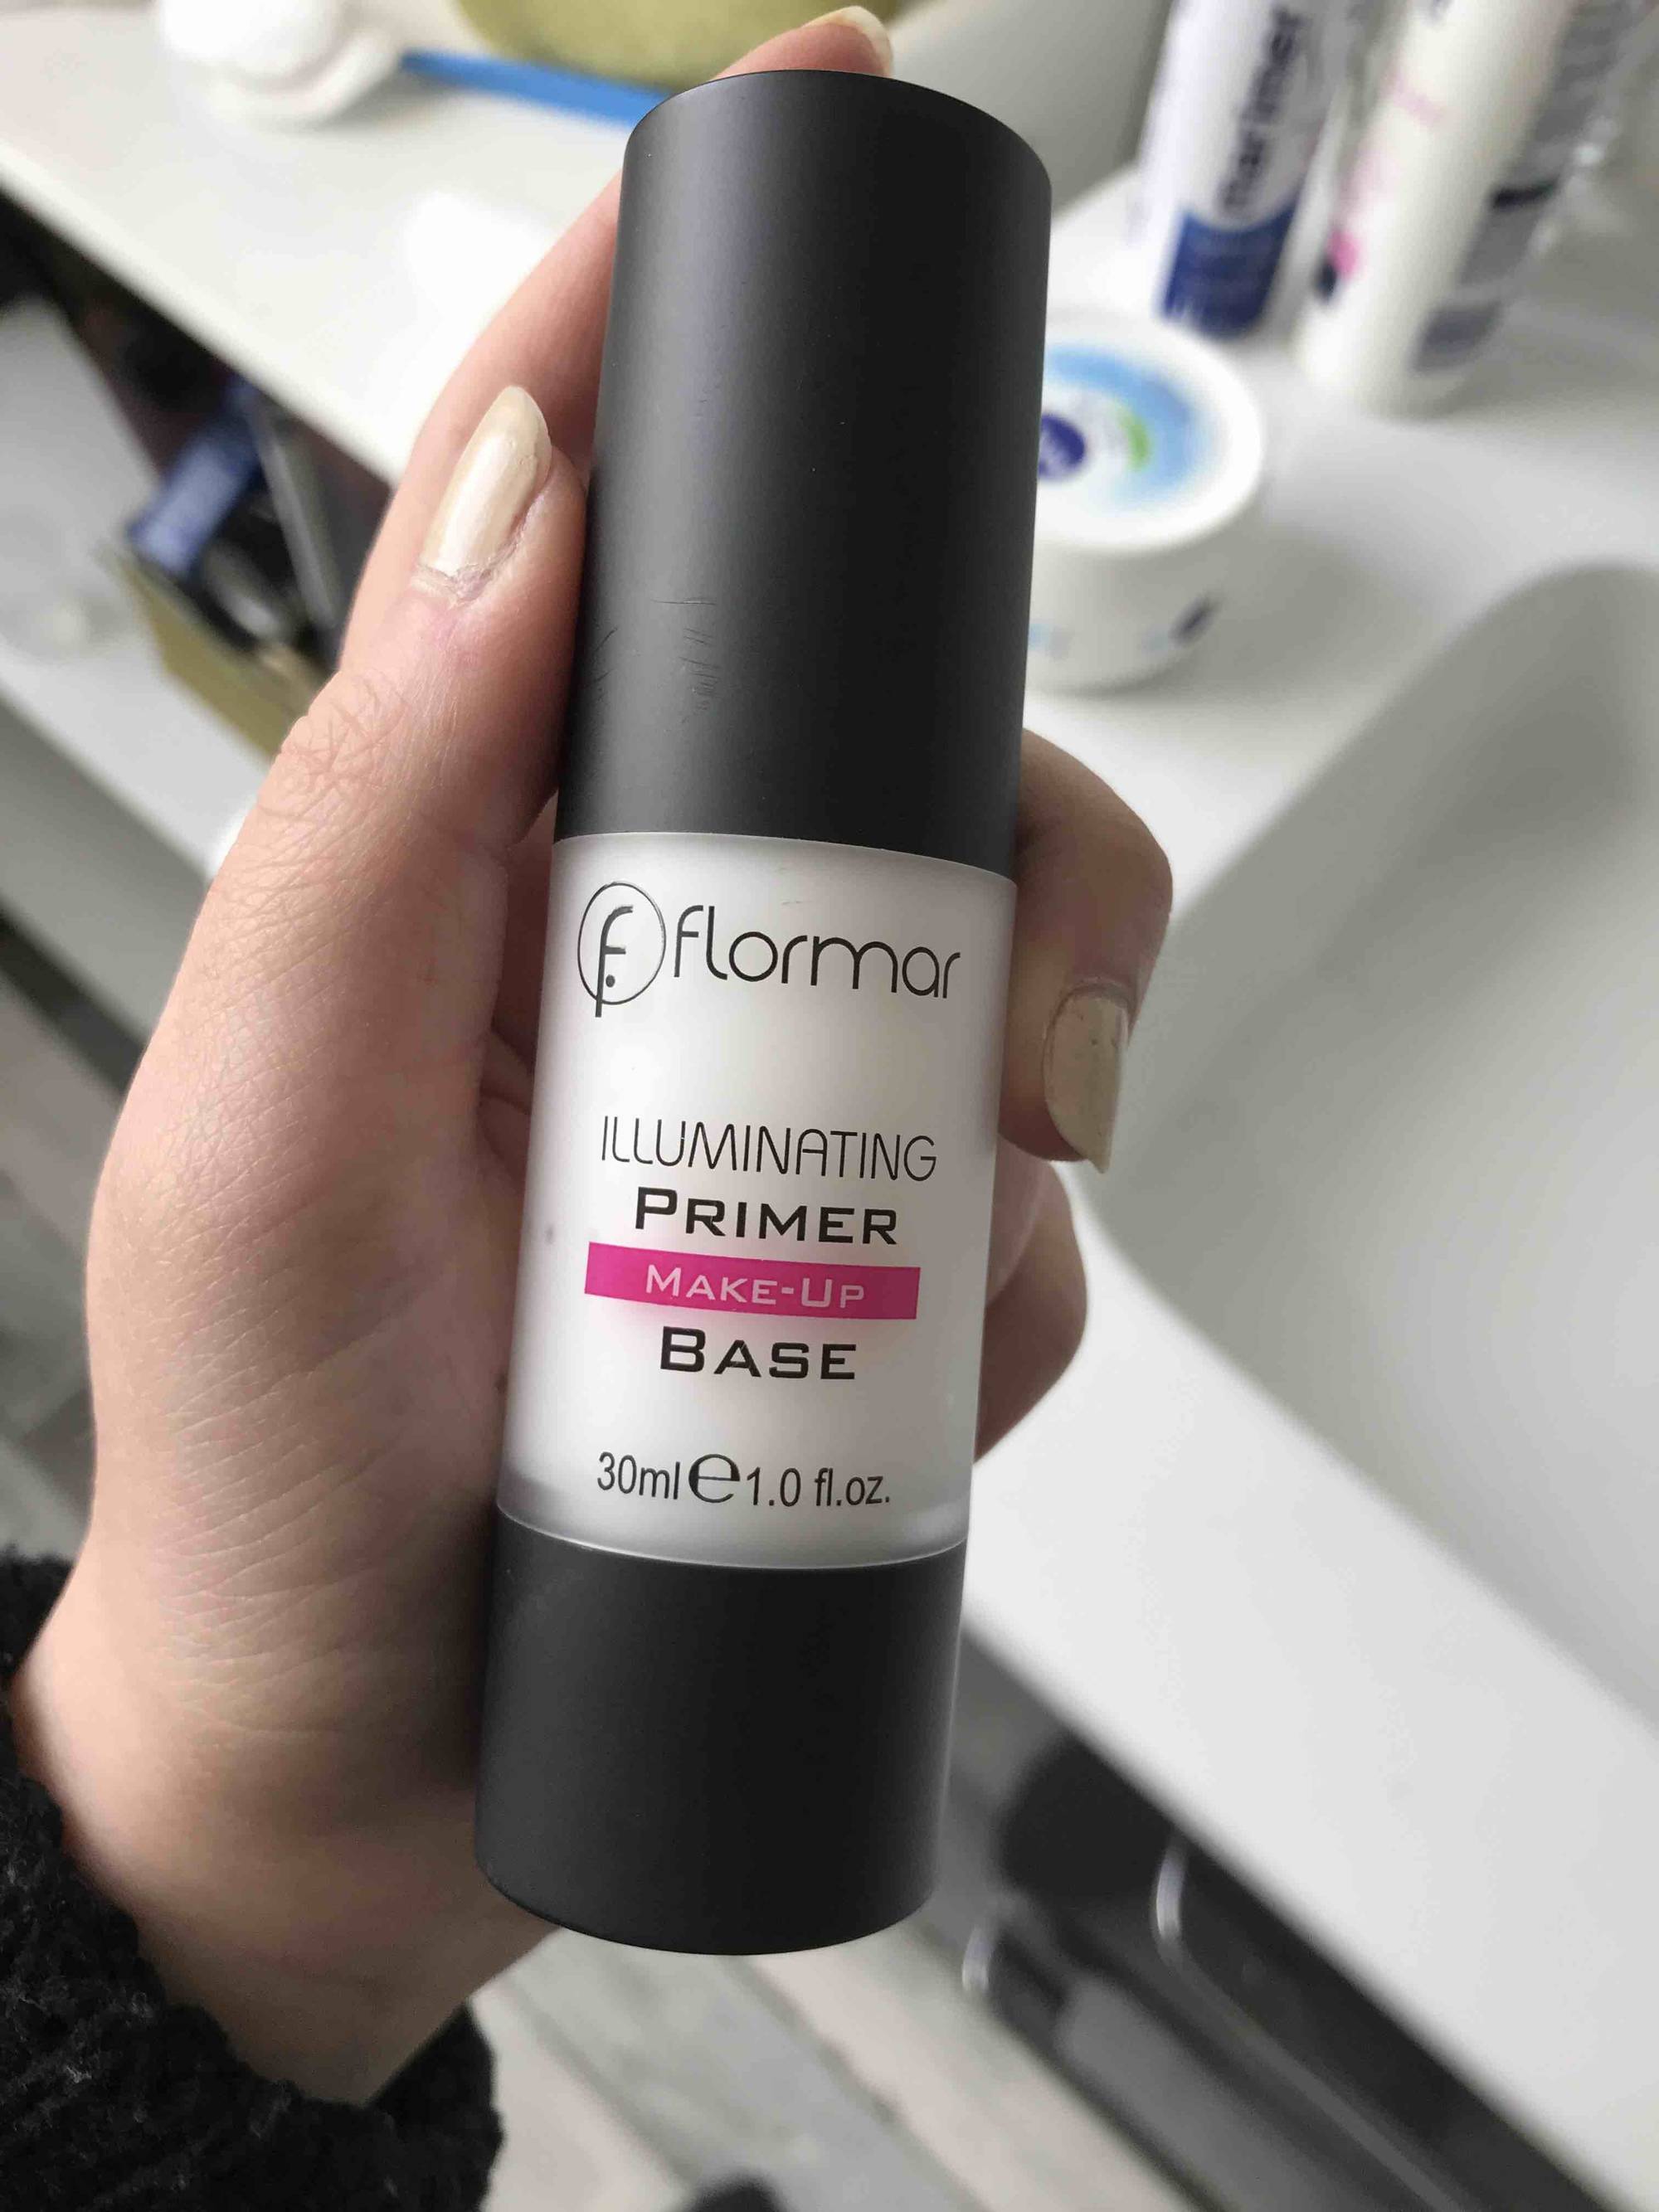 FLORMAR - Illuminating primer - Make-up base